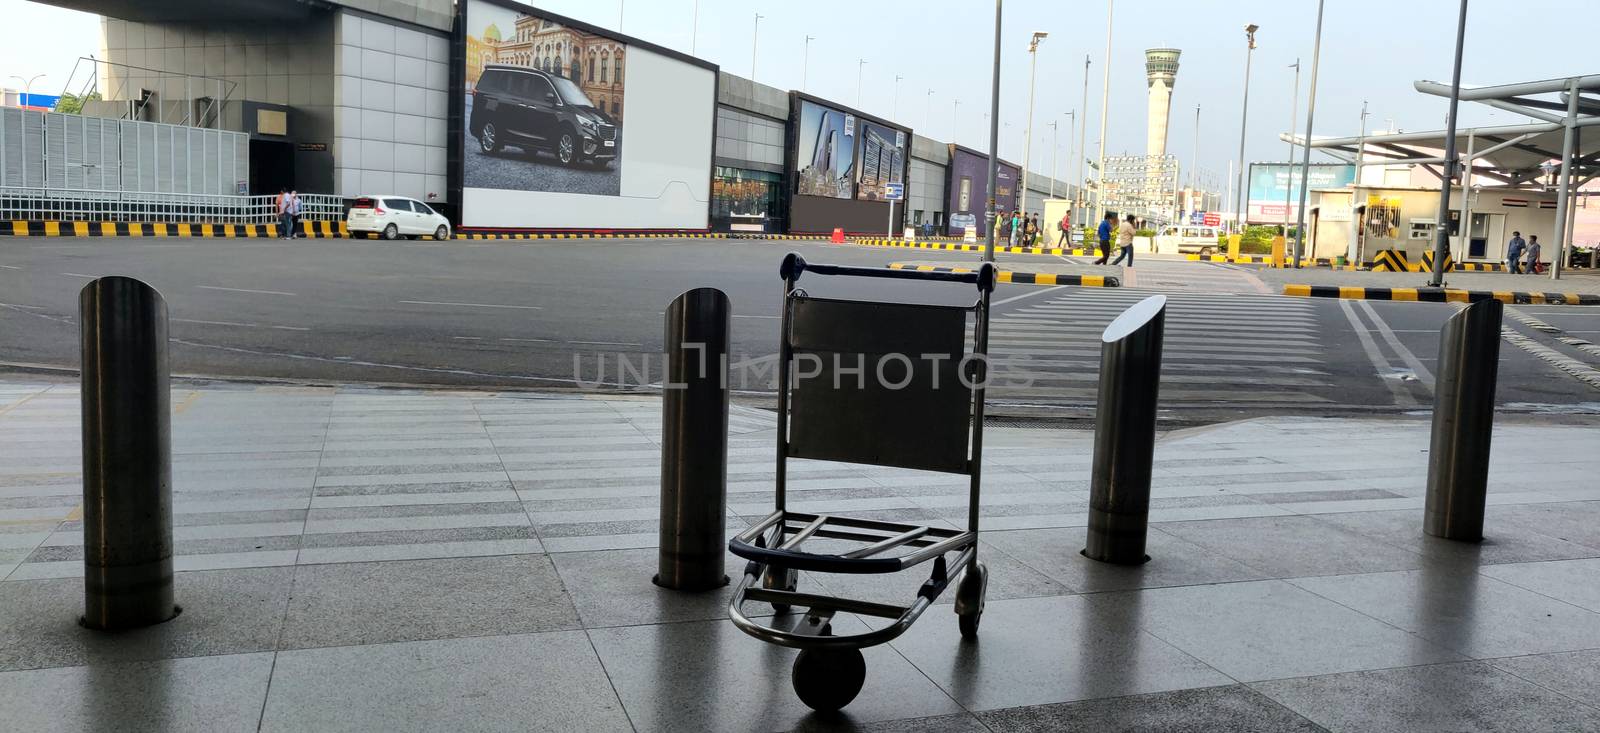 Empty bag trolley at International airport of Delhi in June 2020 amidst corona virus pandemic at Indira Gandhi International Airport n Delhi, India